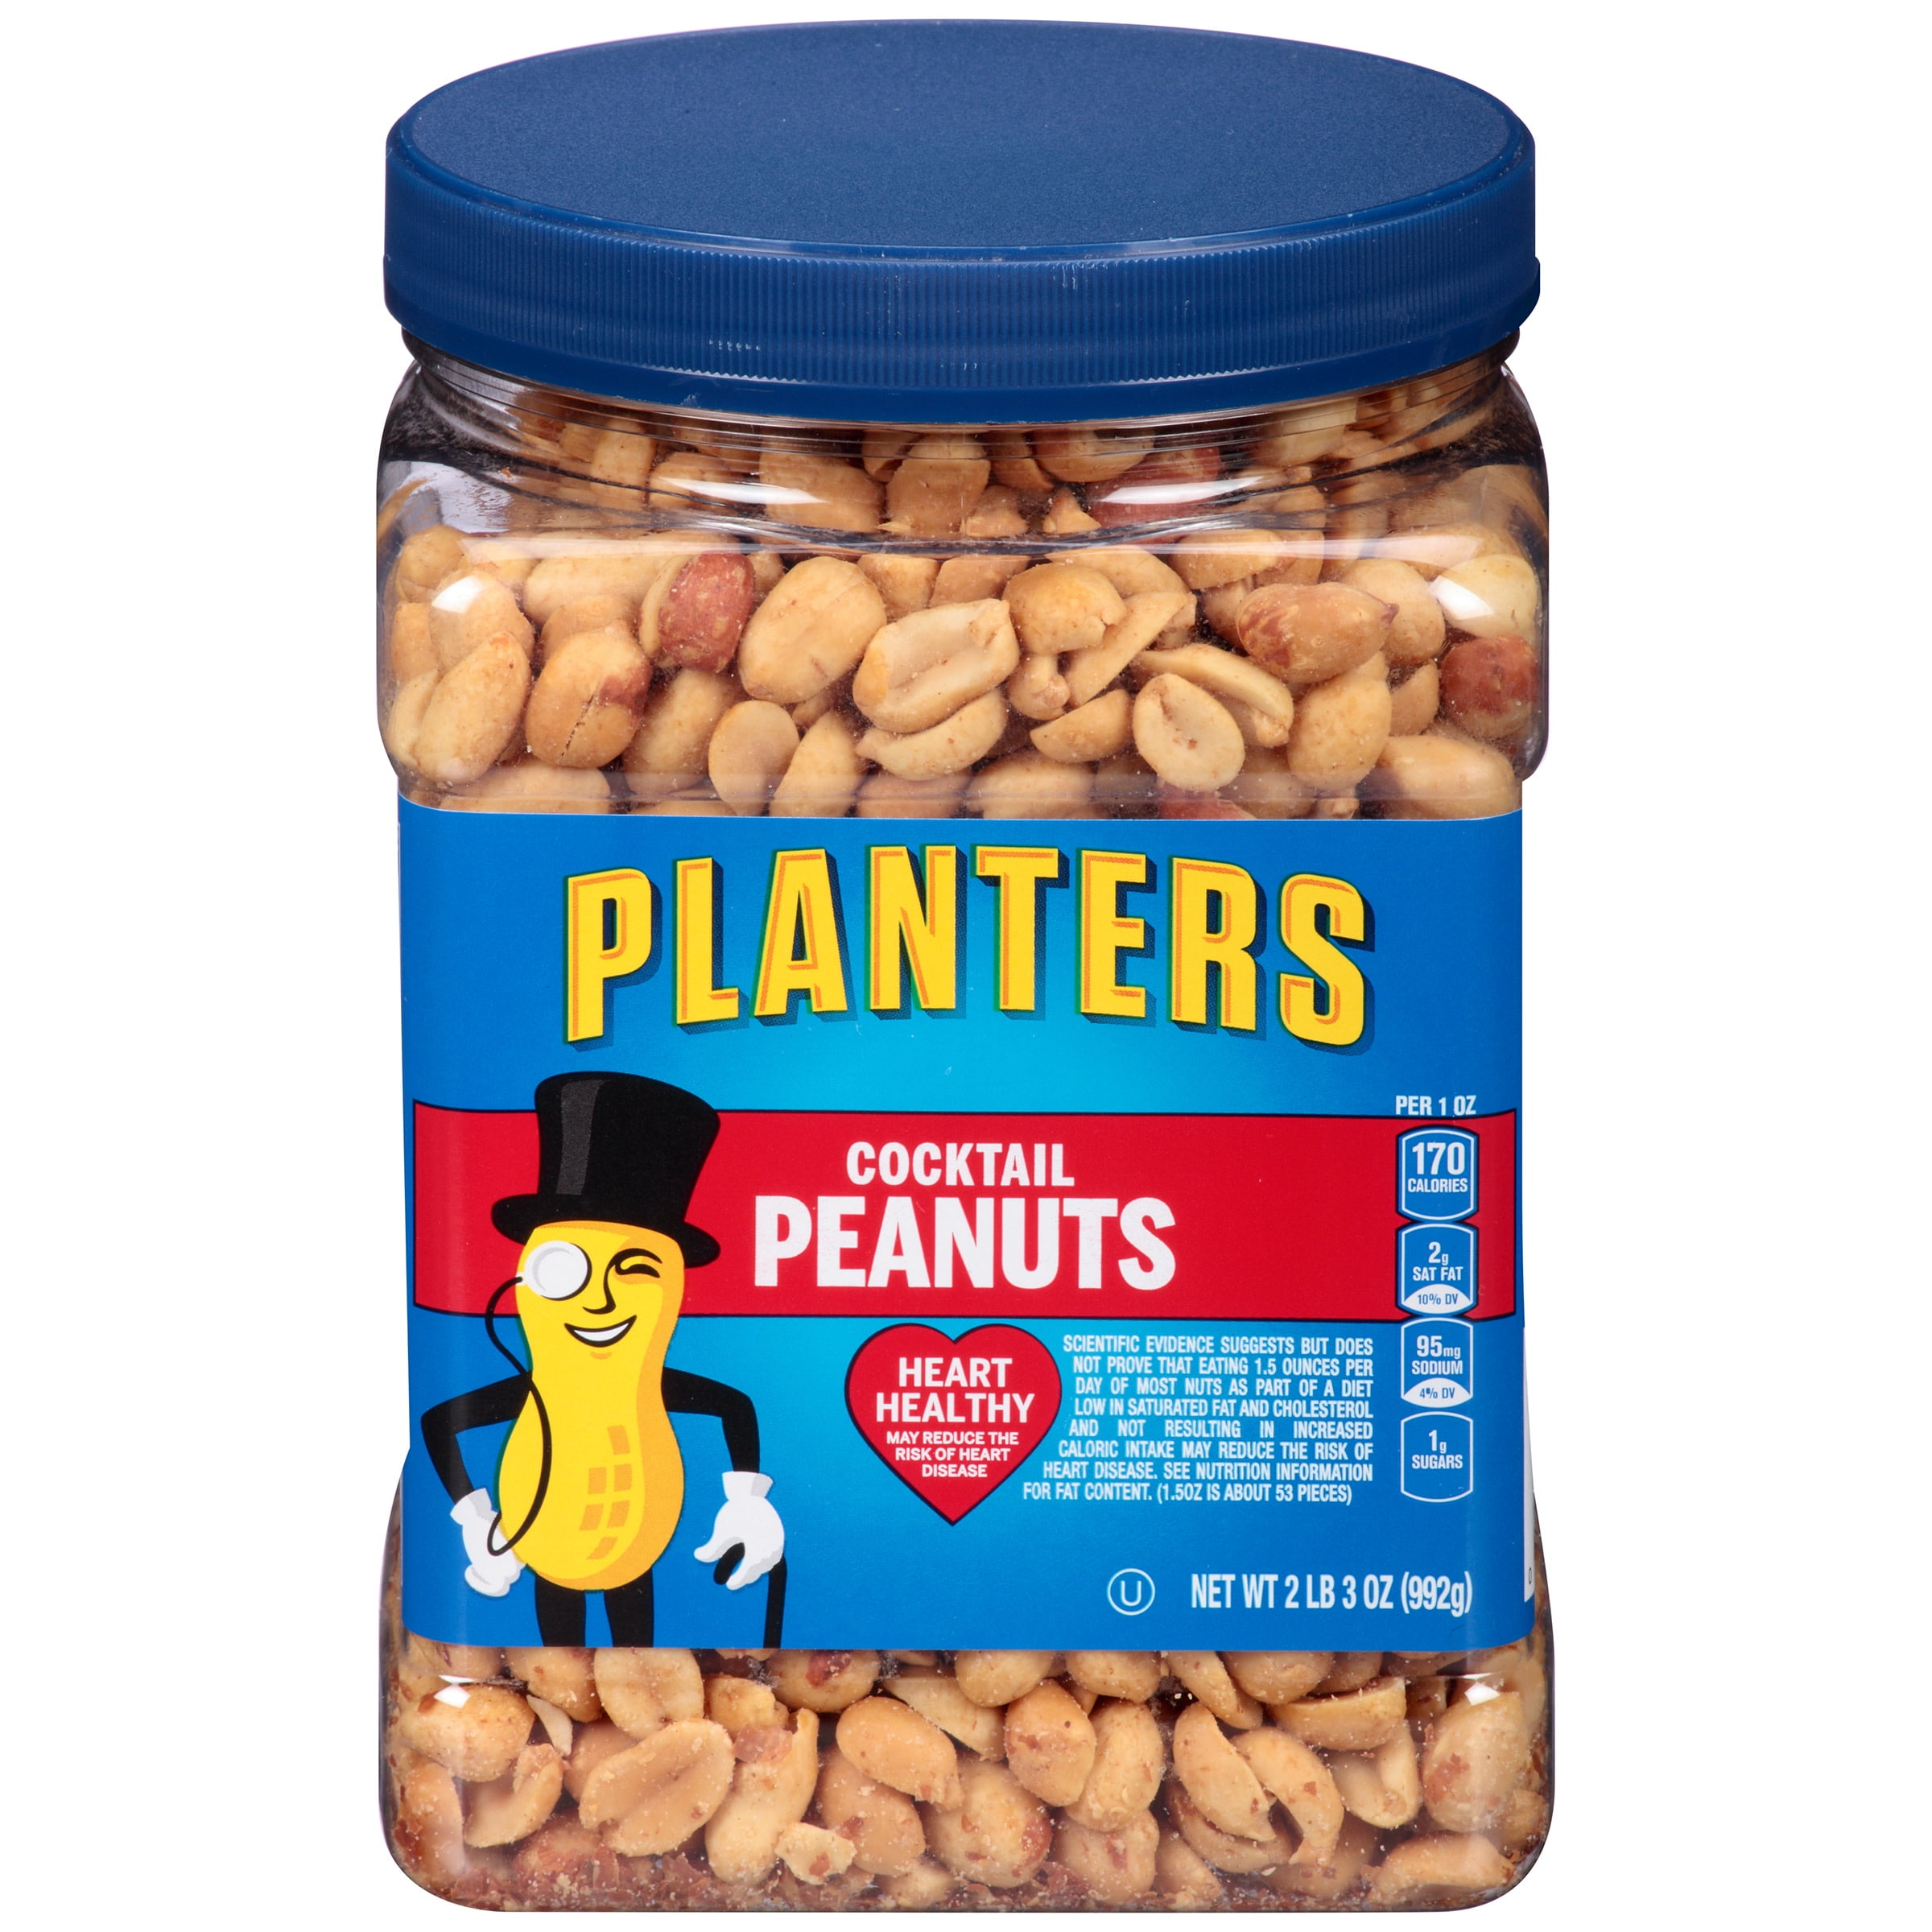 Planters Tail Peanuts 2 19 Lb, Ceramic Garden Planters Extra Large Virginia Peanuts